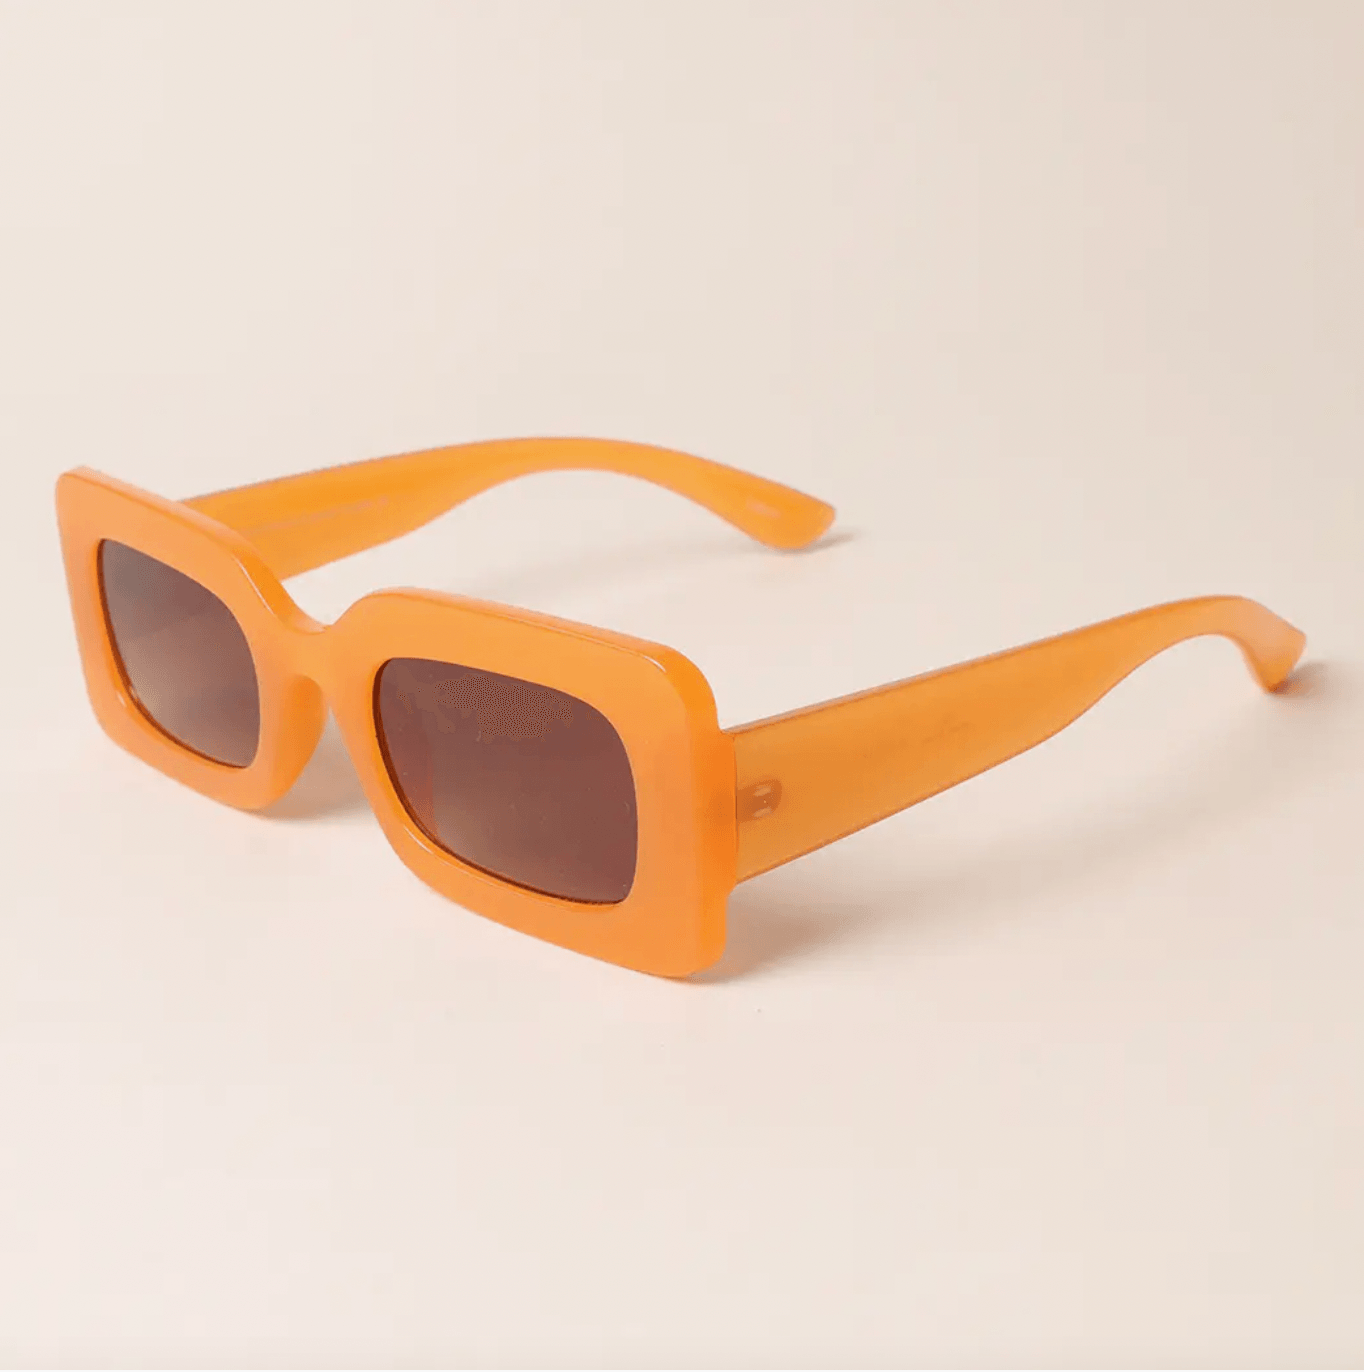 Daphne Sunglasses - Ivy Bay